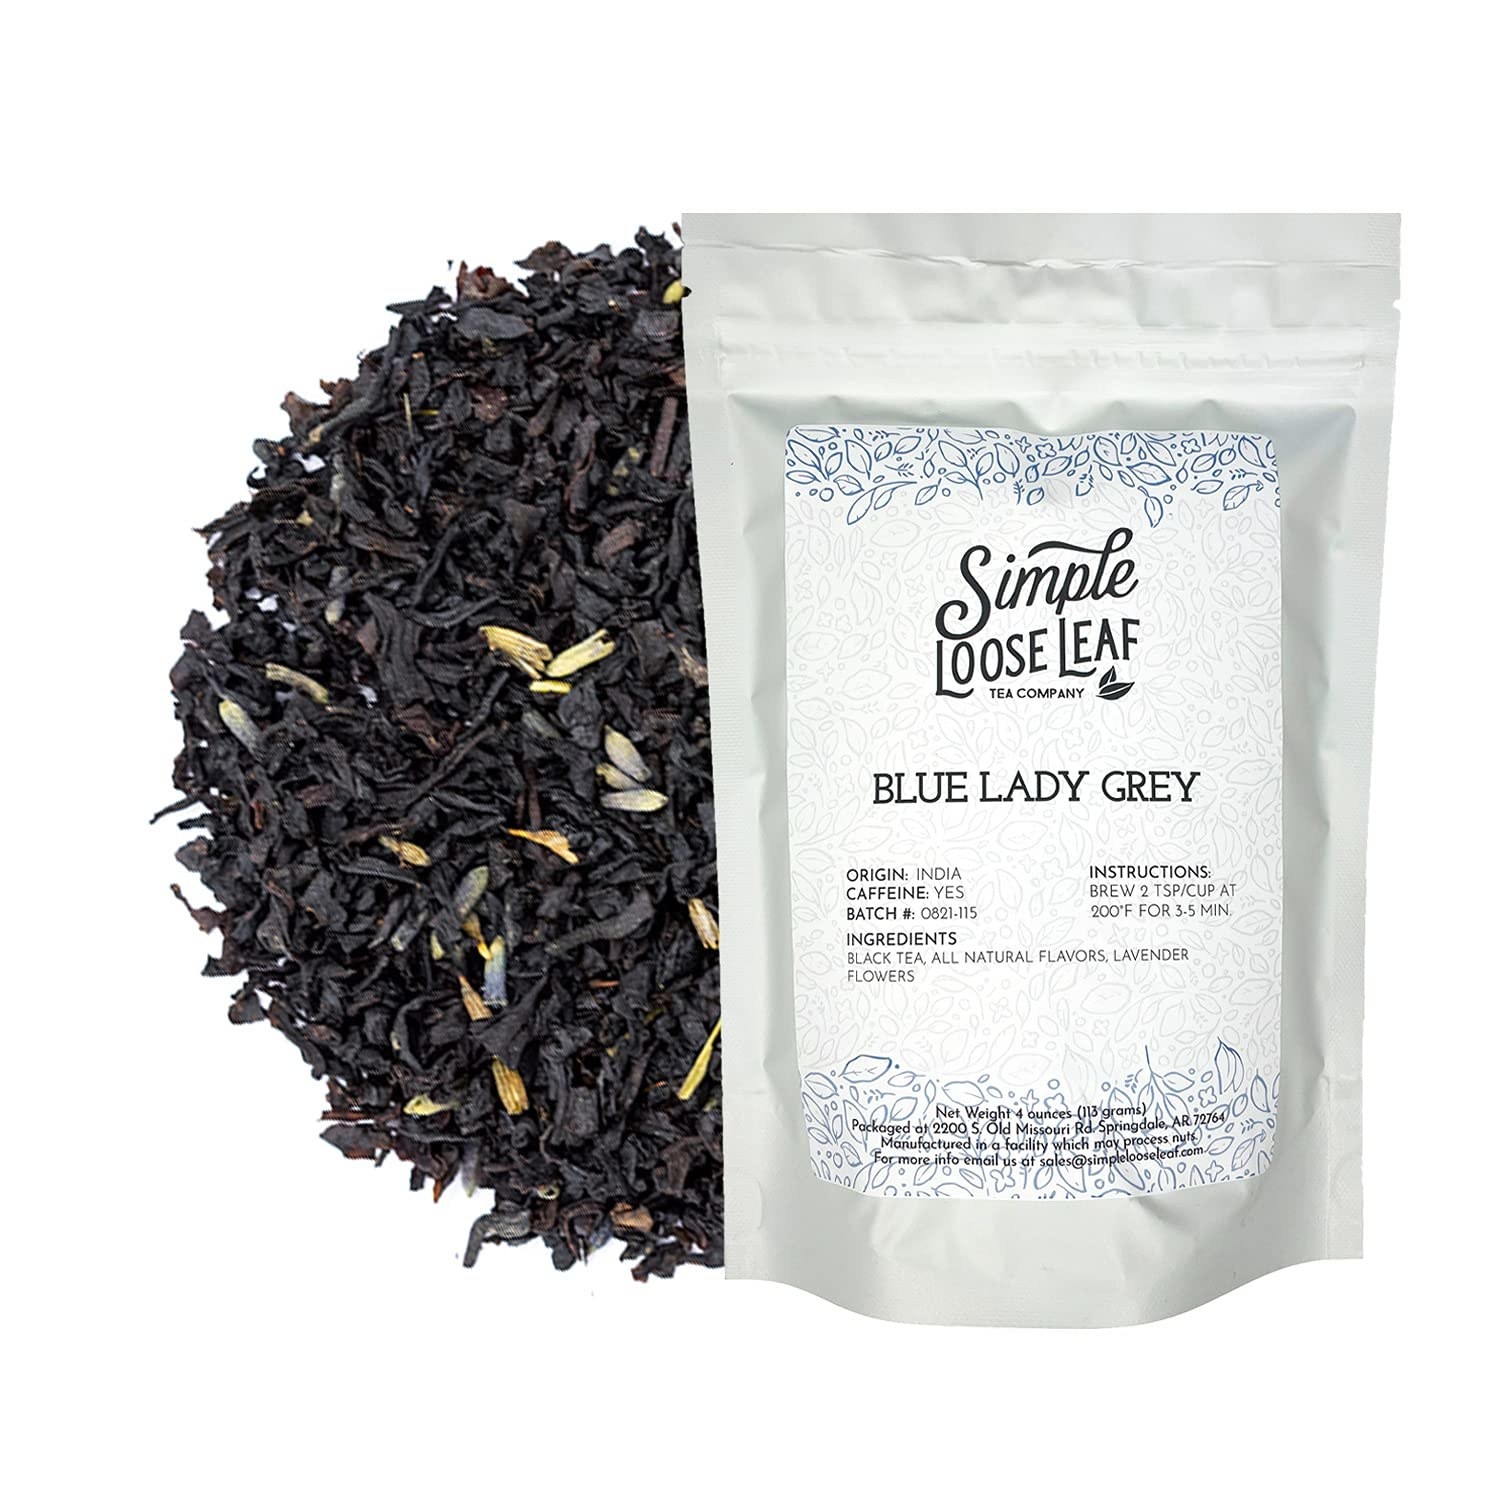 a bag of simple loose leaf blue lady grey tea